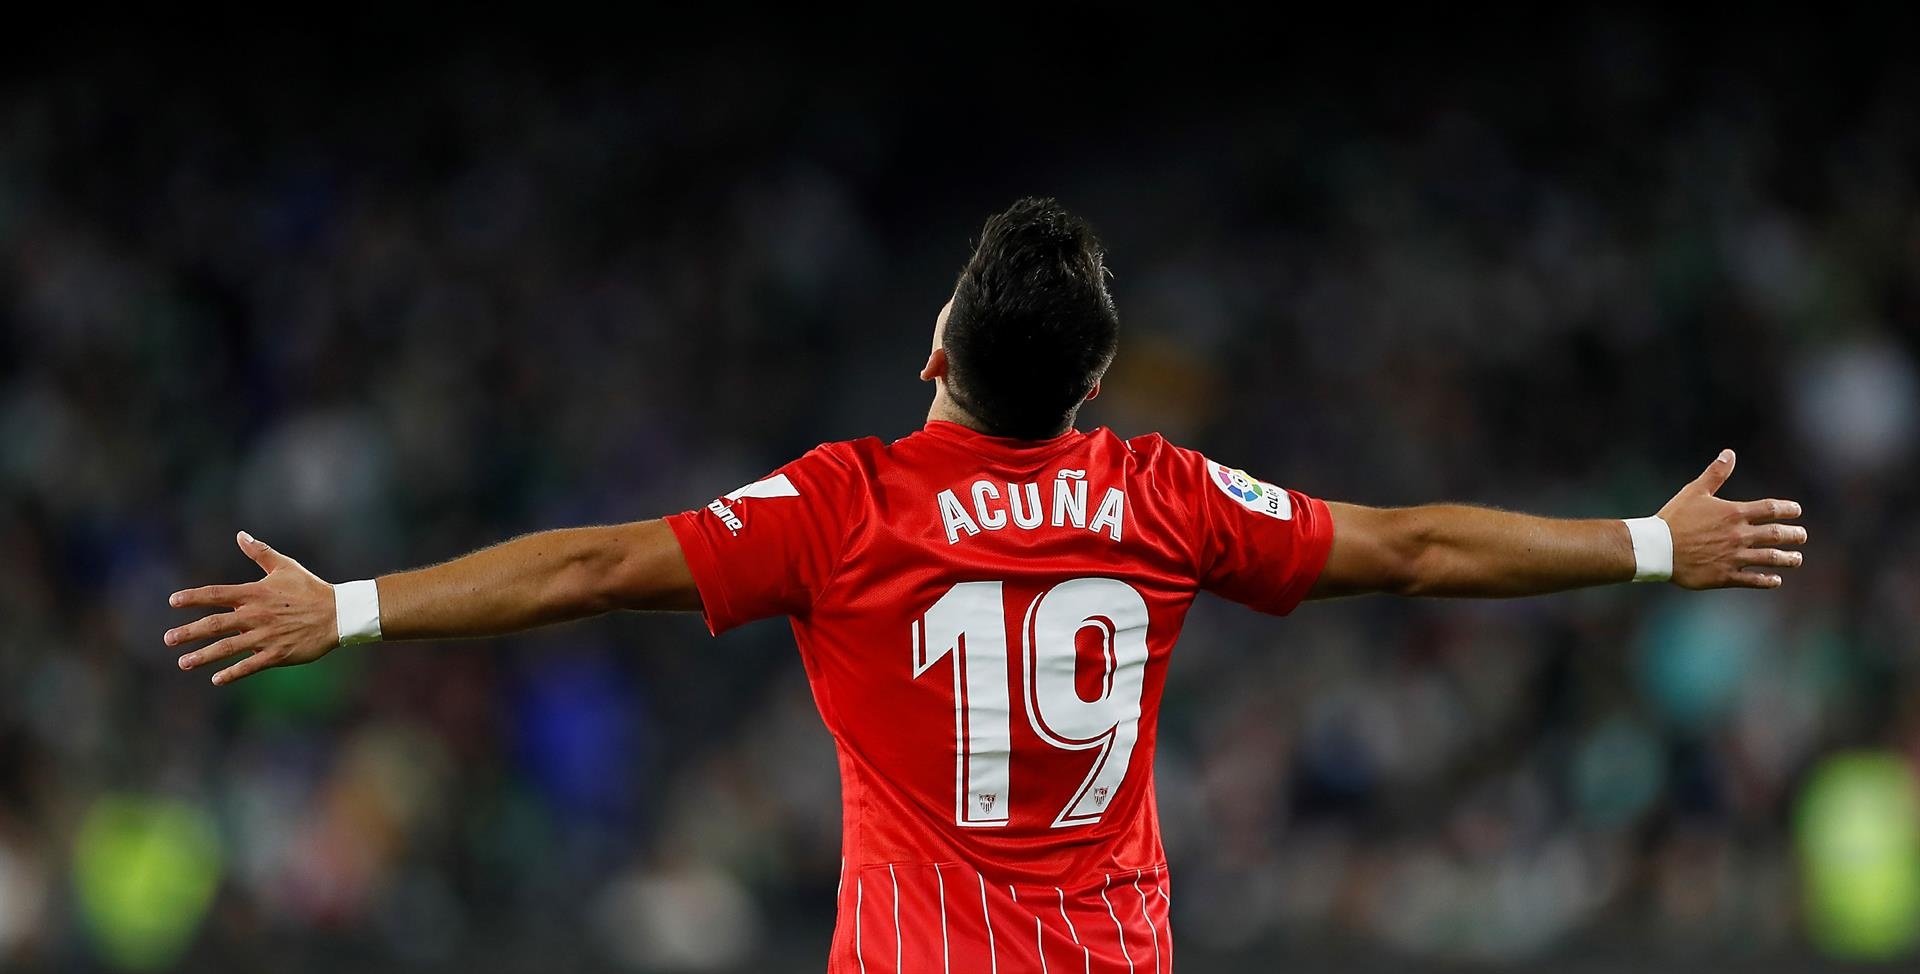 Sevilla keep an eye on Ten Hag: he wants Acuna for his United team